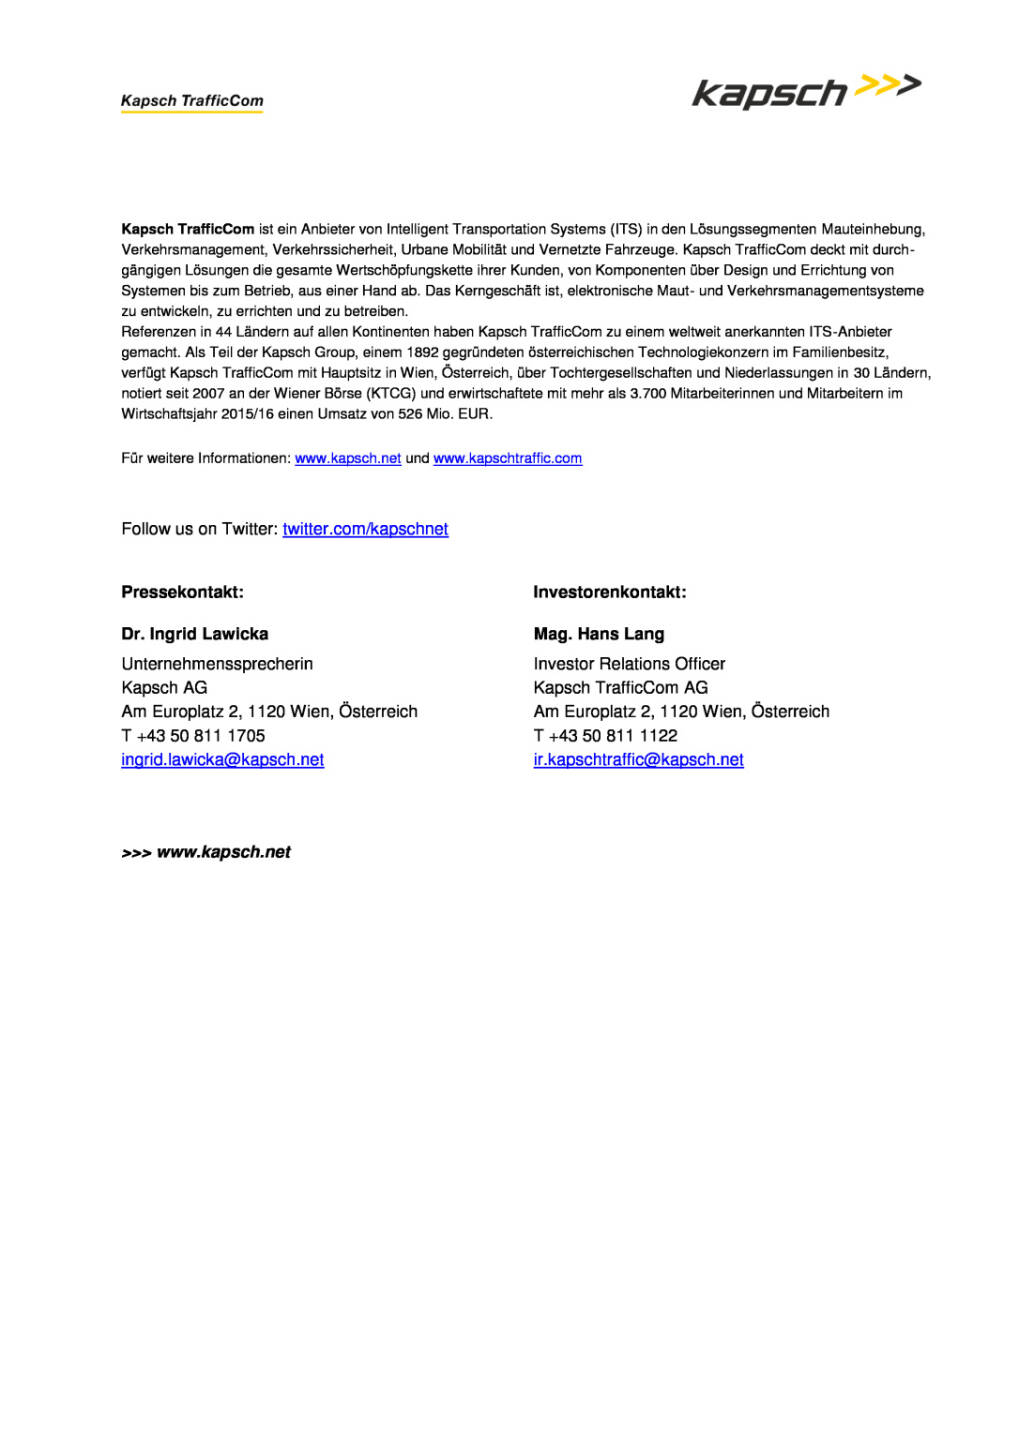 Kapsch TrafficCom AG : Hans Lang ist neuer Investor Relations & Compliance Officer, Seite 2/2, komplettes Dokument unter http://boerse-social.com/static/uploads/file_1622_kapsch_trafficcom_ag_hans_lang_ist_neuer_investor_relations_compliance_officer.pdf